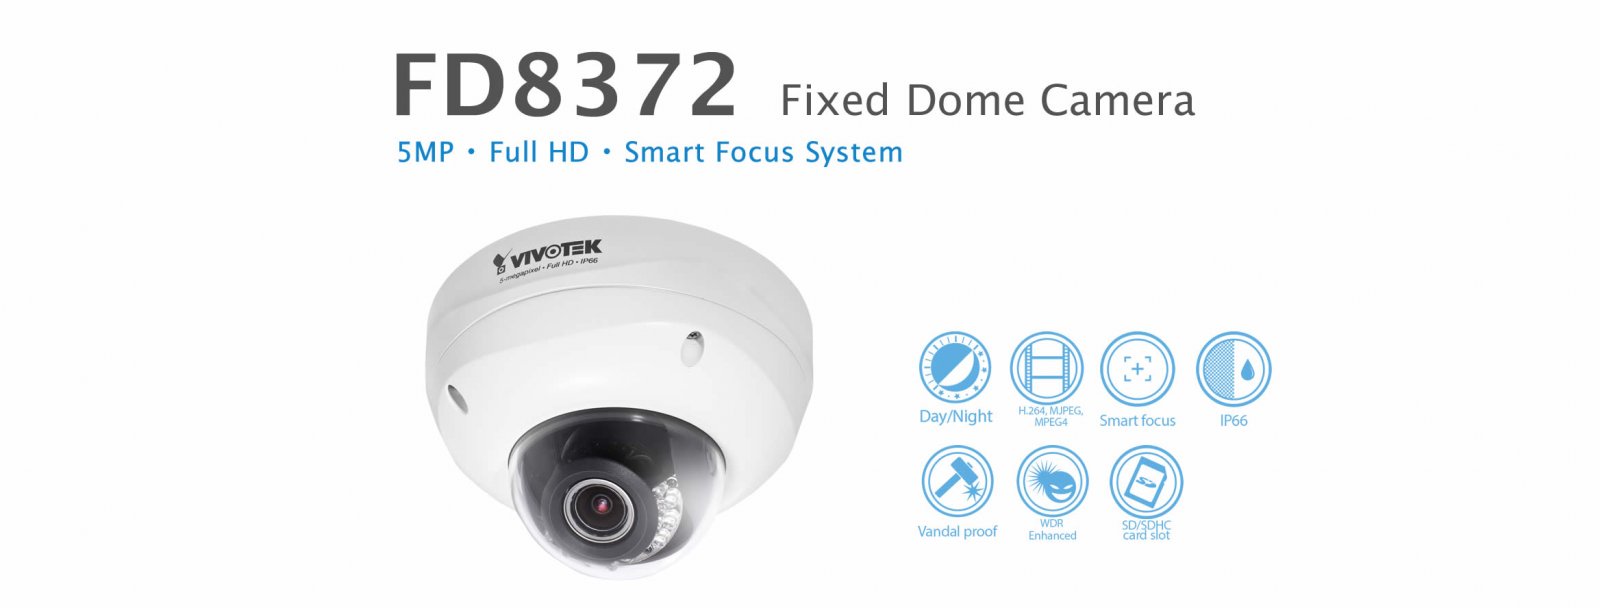 FD8372. Vivotek Fixed Dome Network Camera